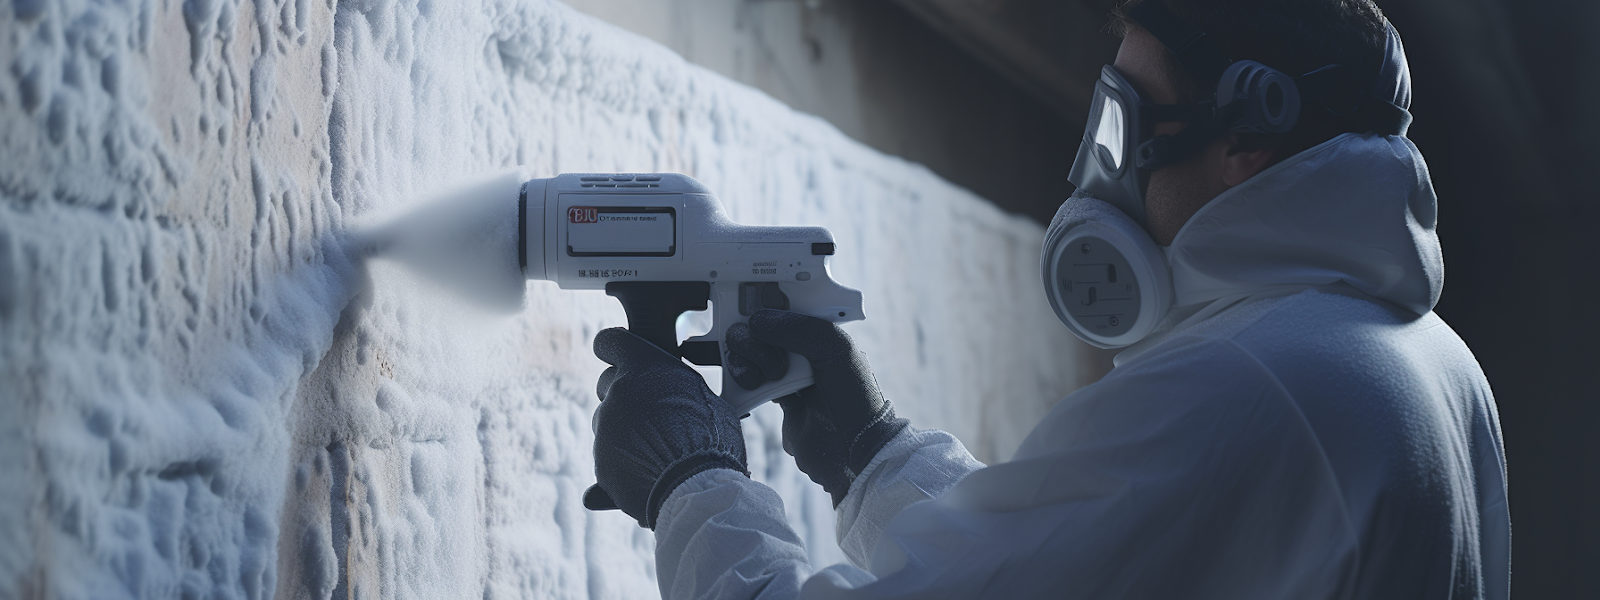 a person monitoring the temperature indicator on a spray foam insulation gun.